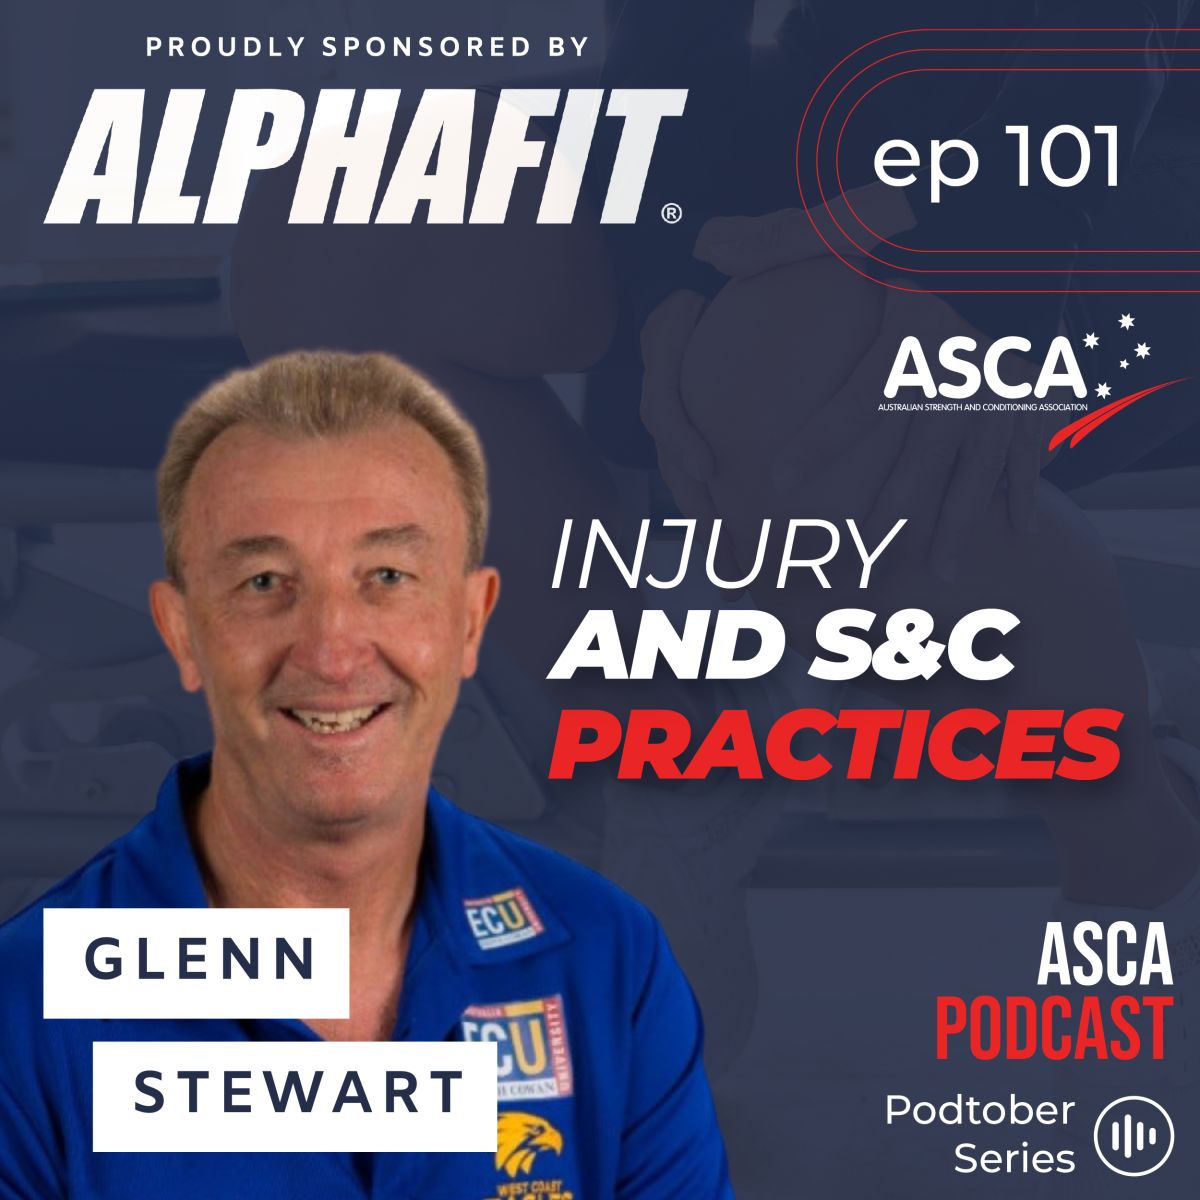 ASCA Podcast Episode 101 Glenn Stewart